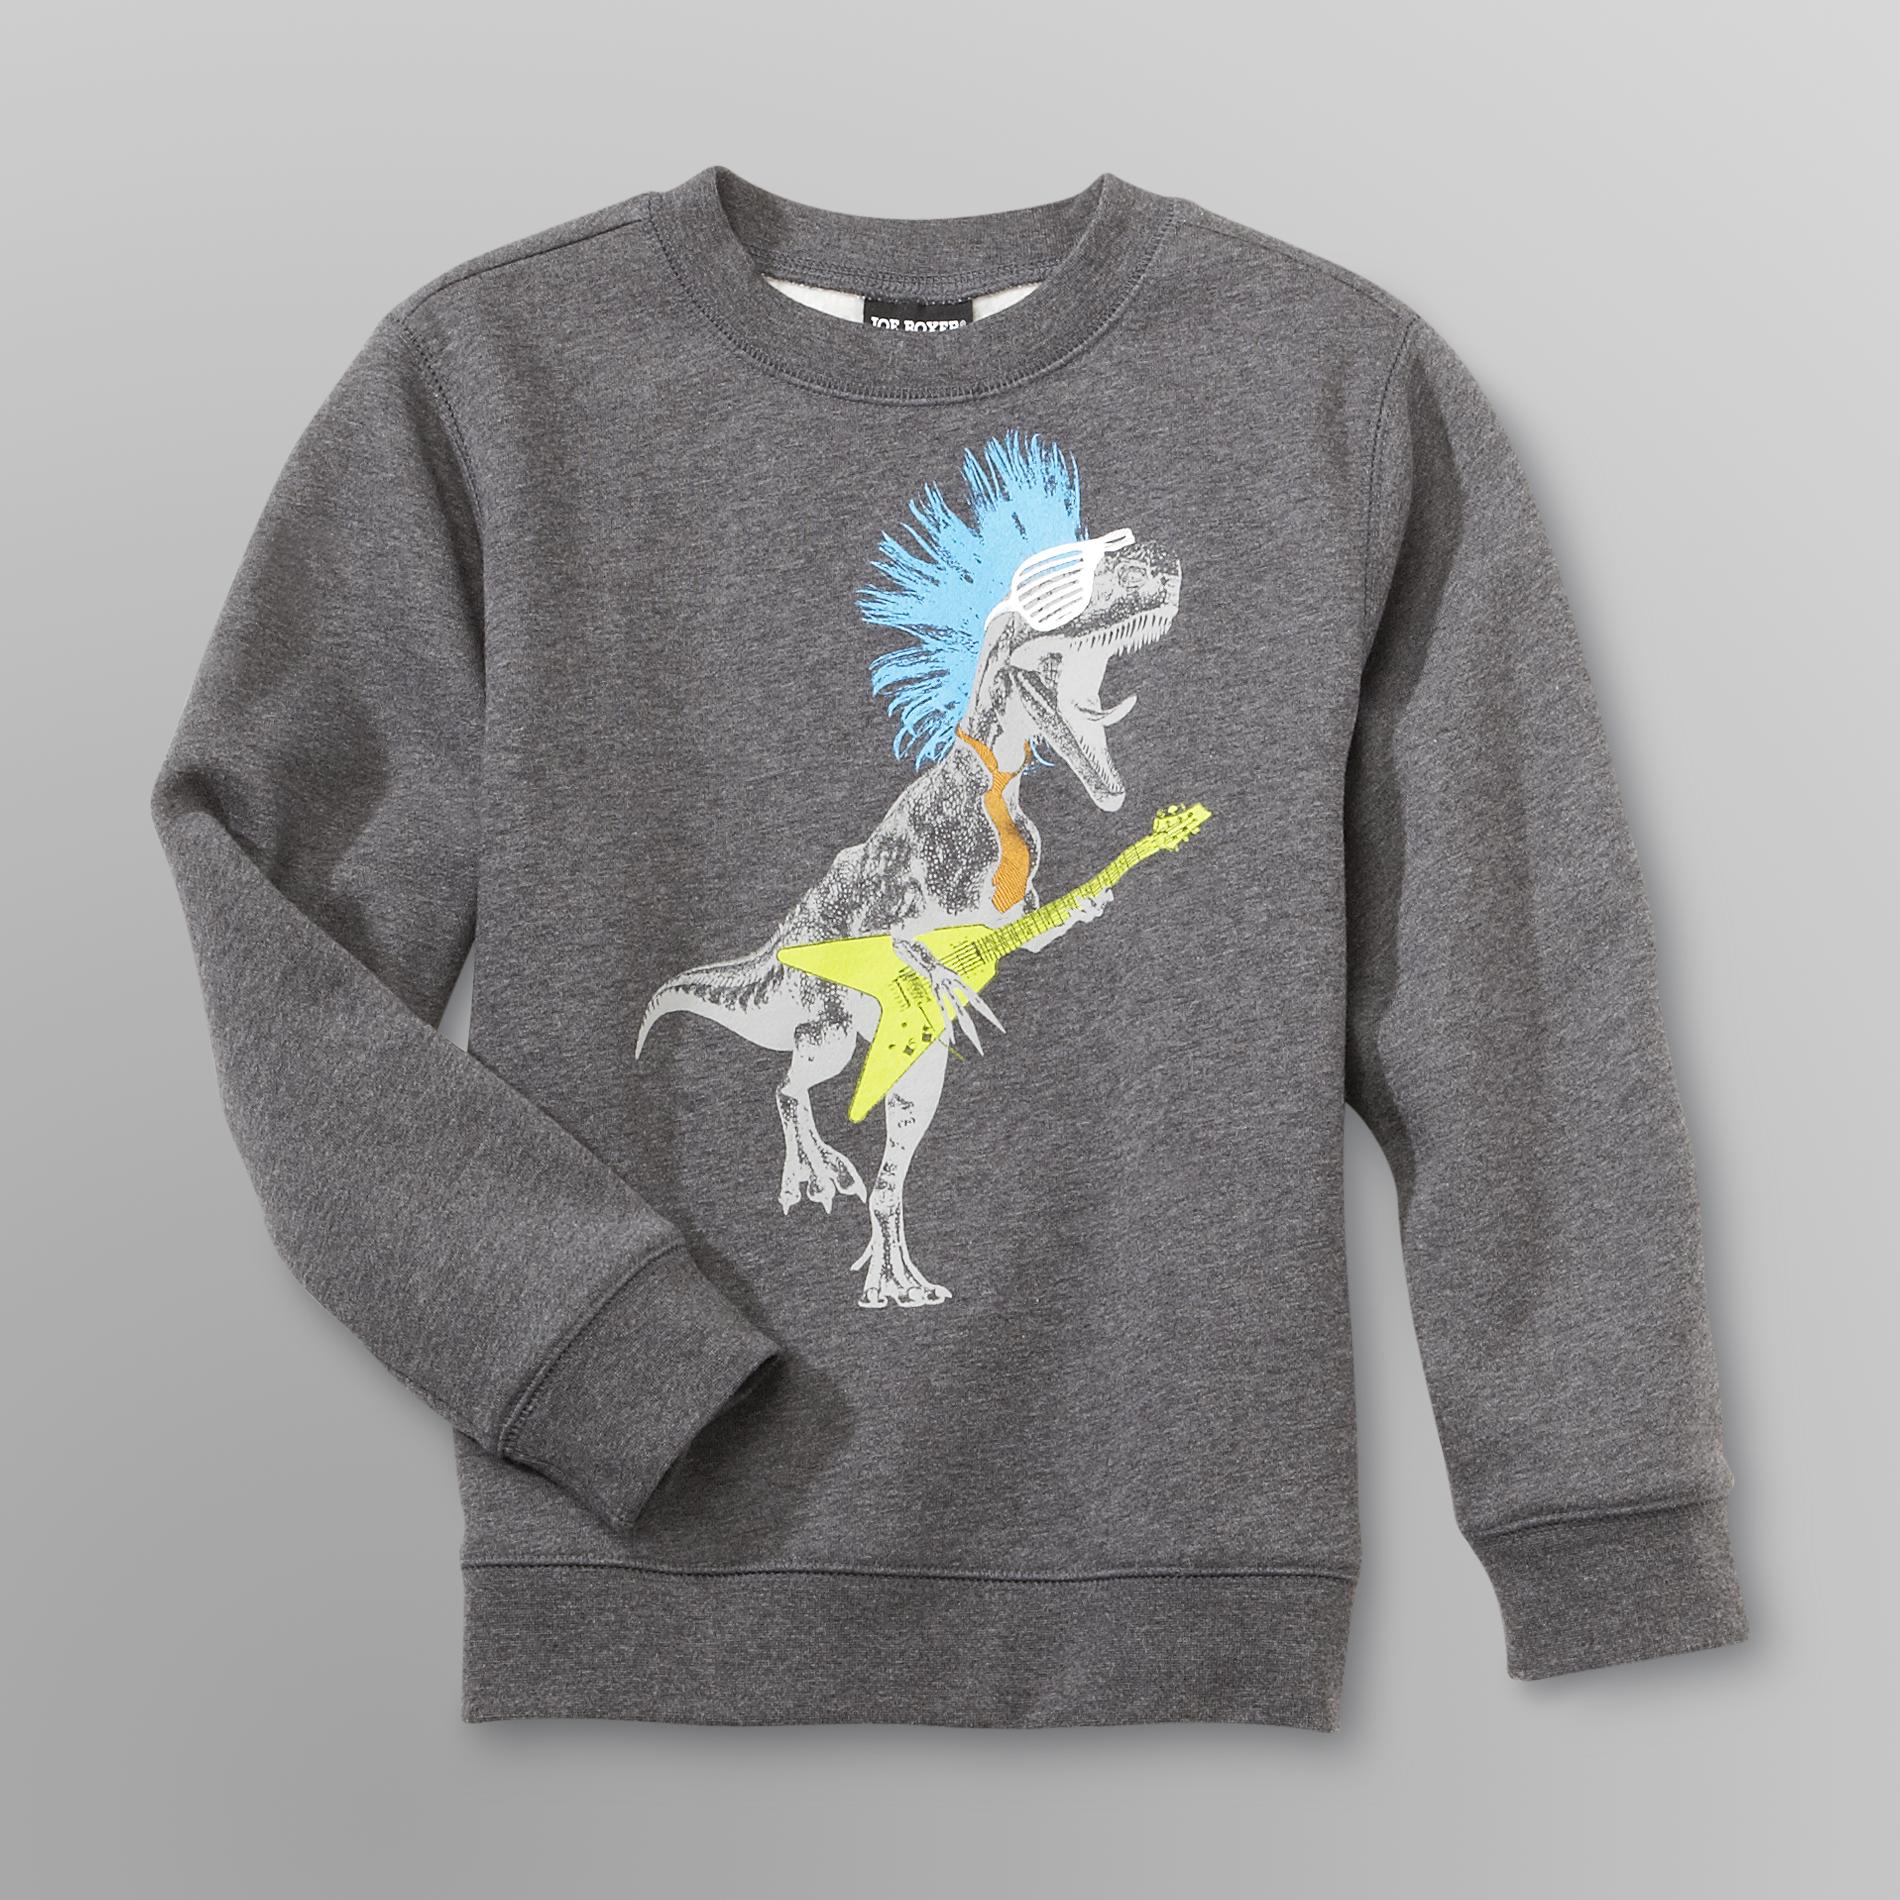 Joe Boxer Boy's Graphic Sweatshirt - Rock Dinosaur